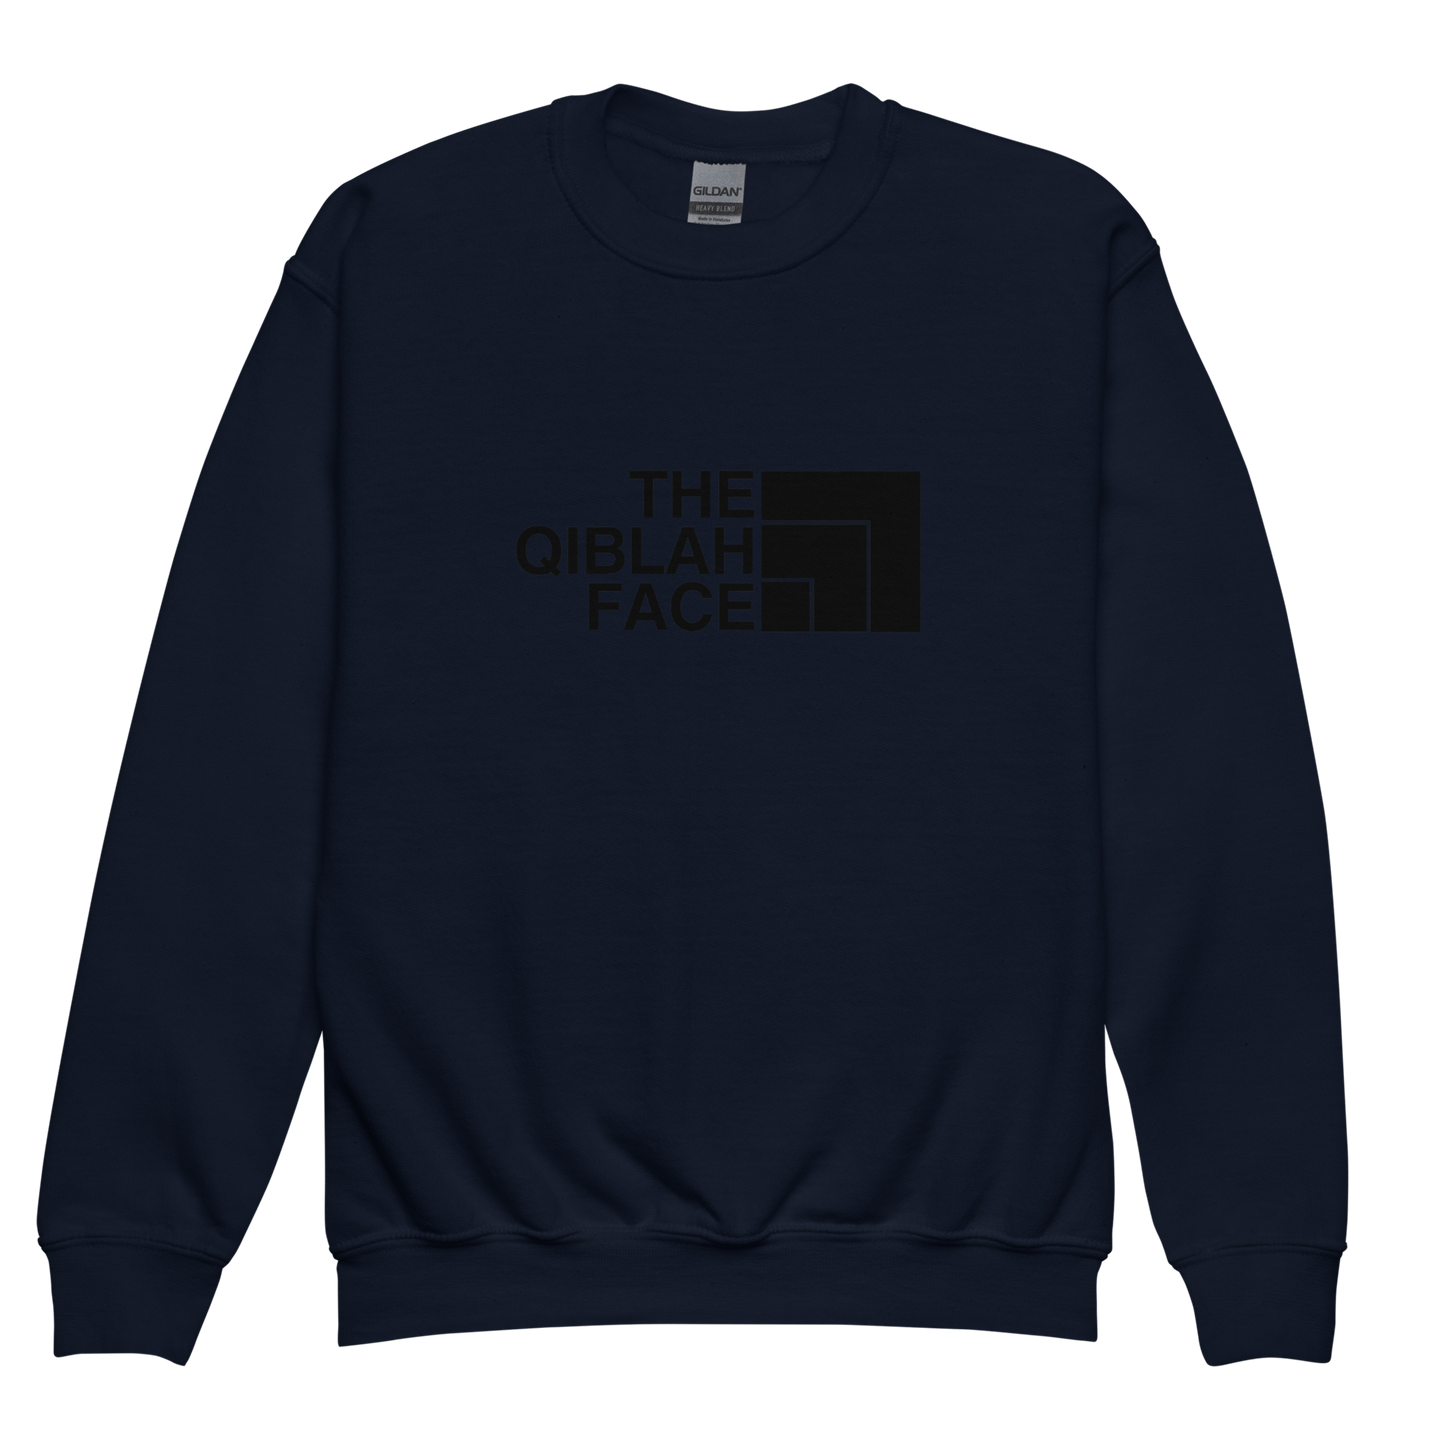 CHILDREN's Crewneck Sweatshirt - THE QIBLAH FACE - Black